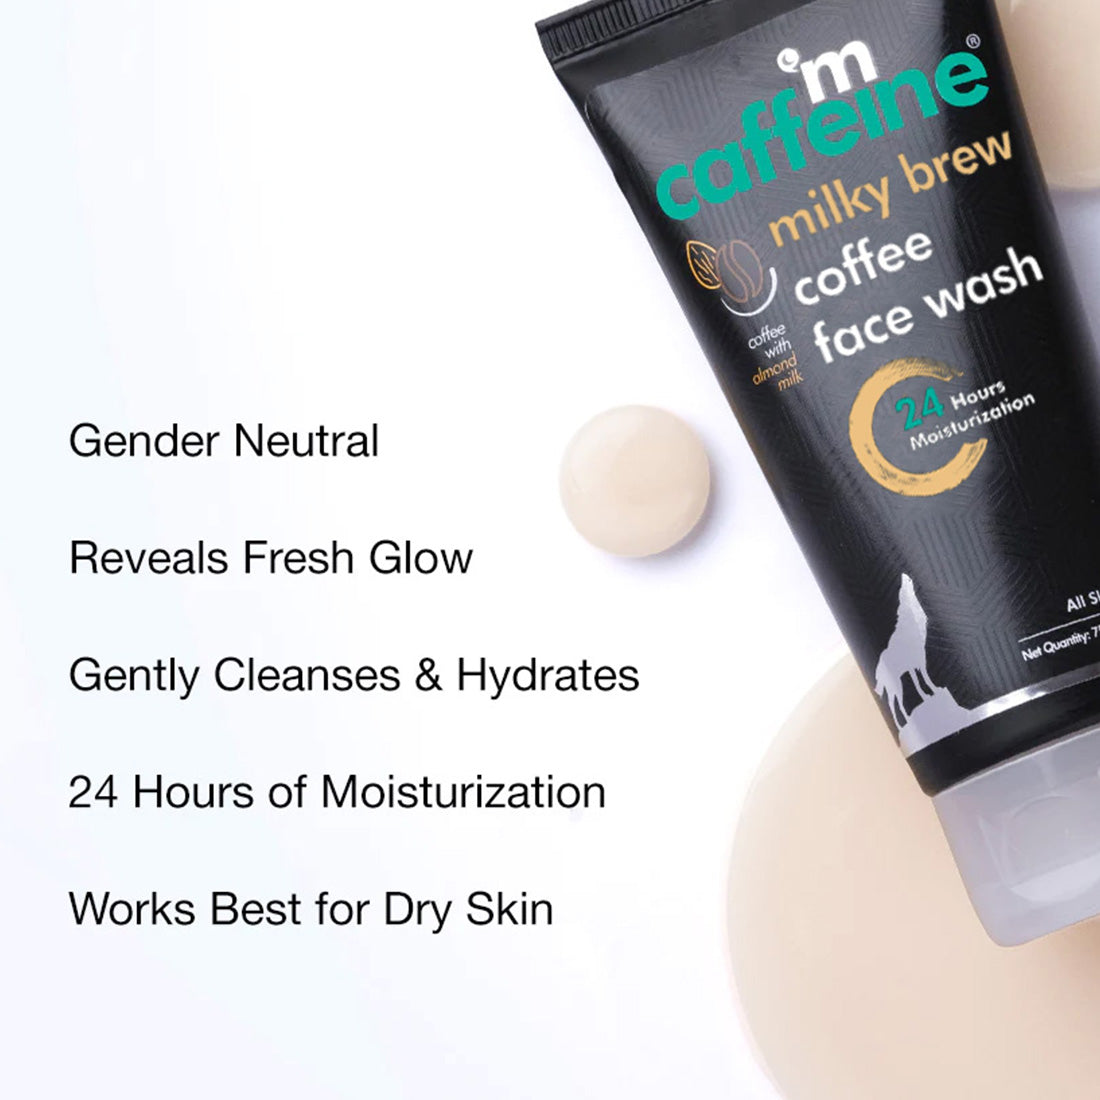 mCaffeine Coffee & Milk Face Wash for 24Hr Moisturization - Soap Free Cleanser with Shea Butter & Almond Milk